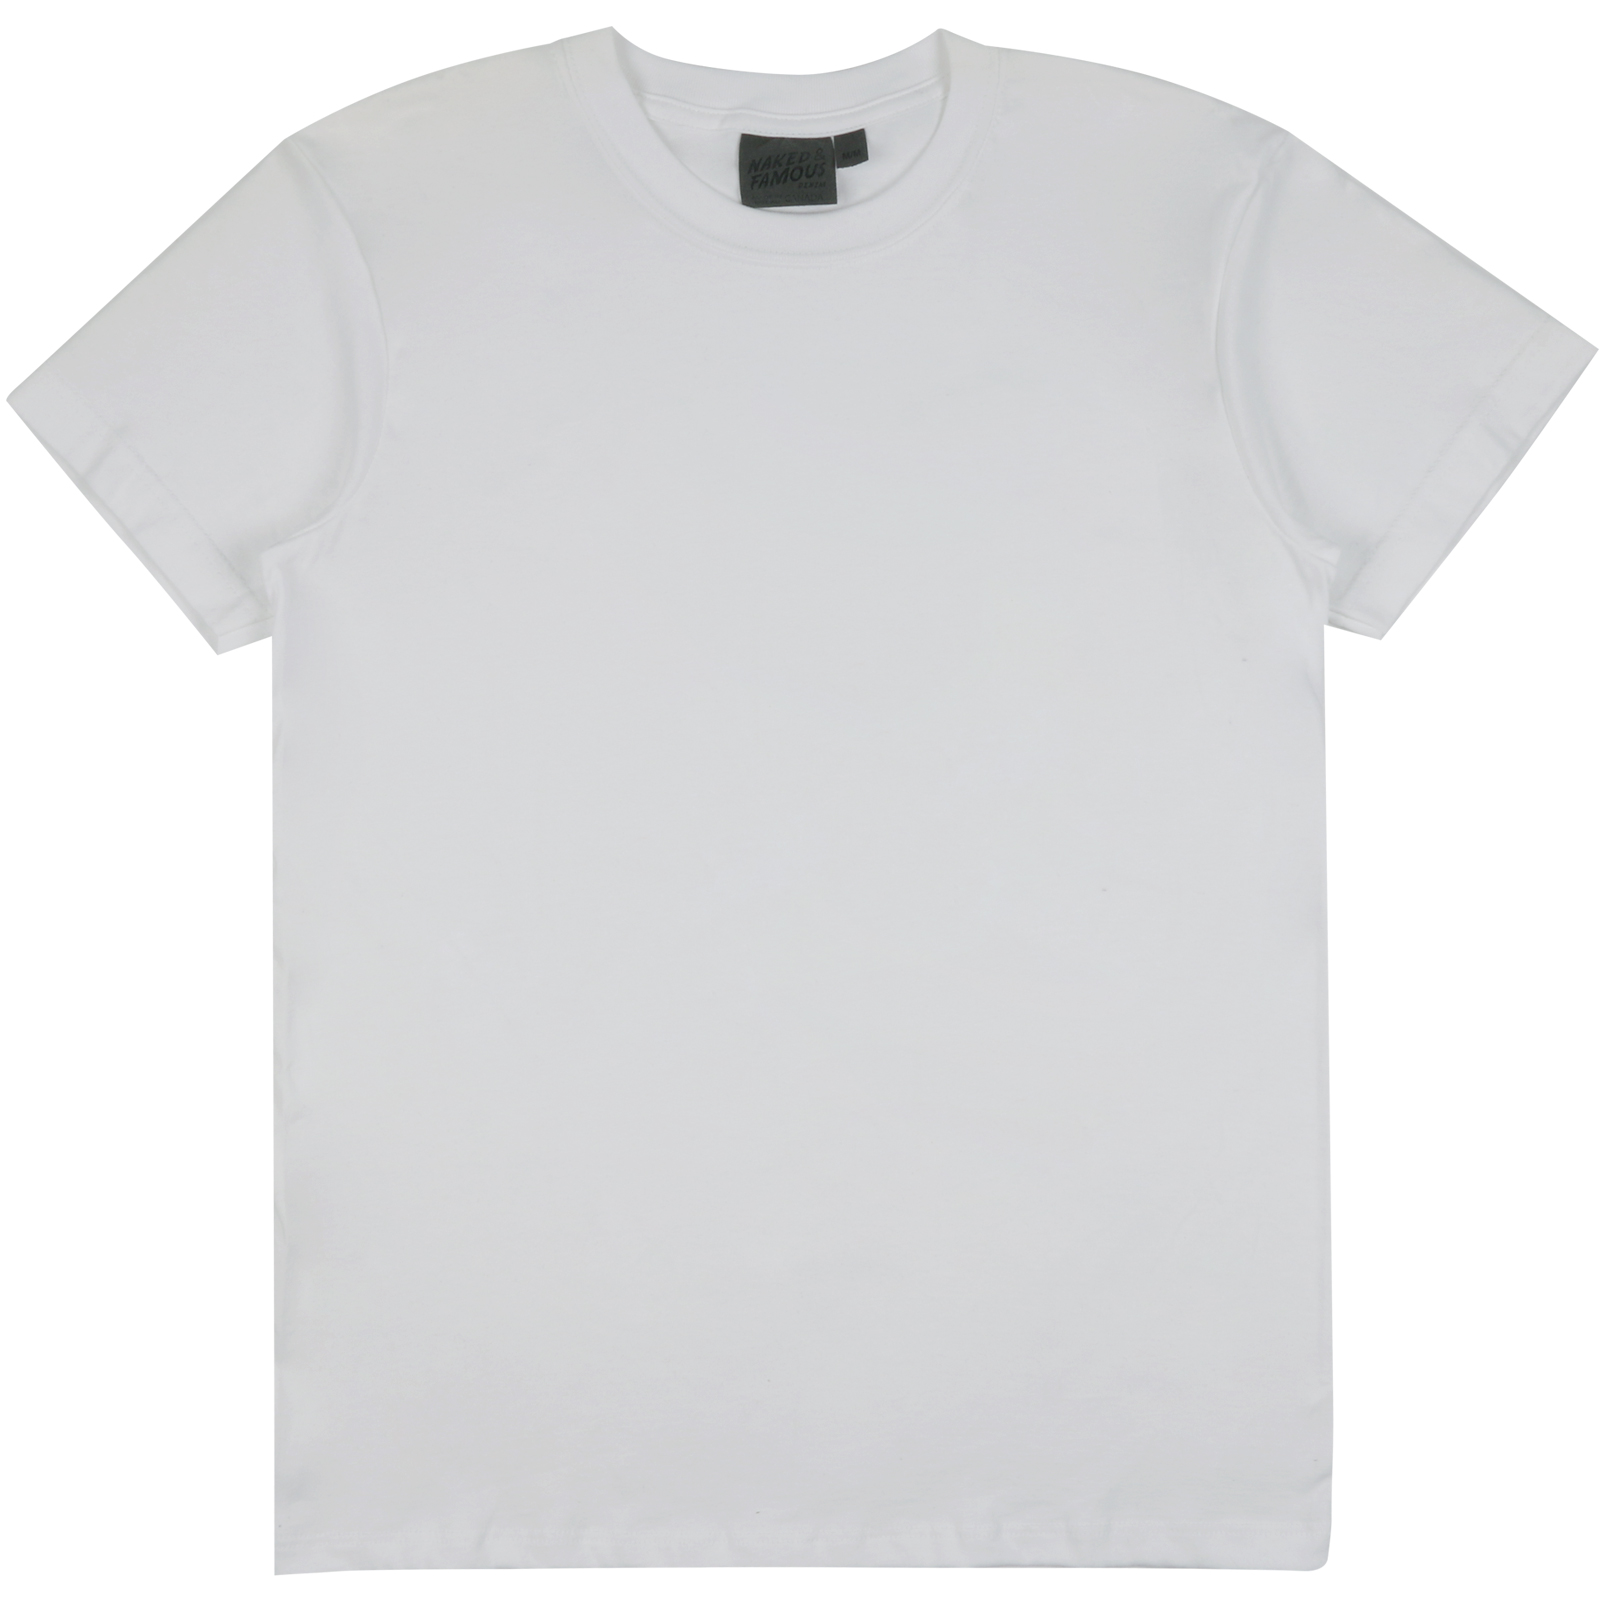  White Circular Knit T-Shirt Flat View 